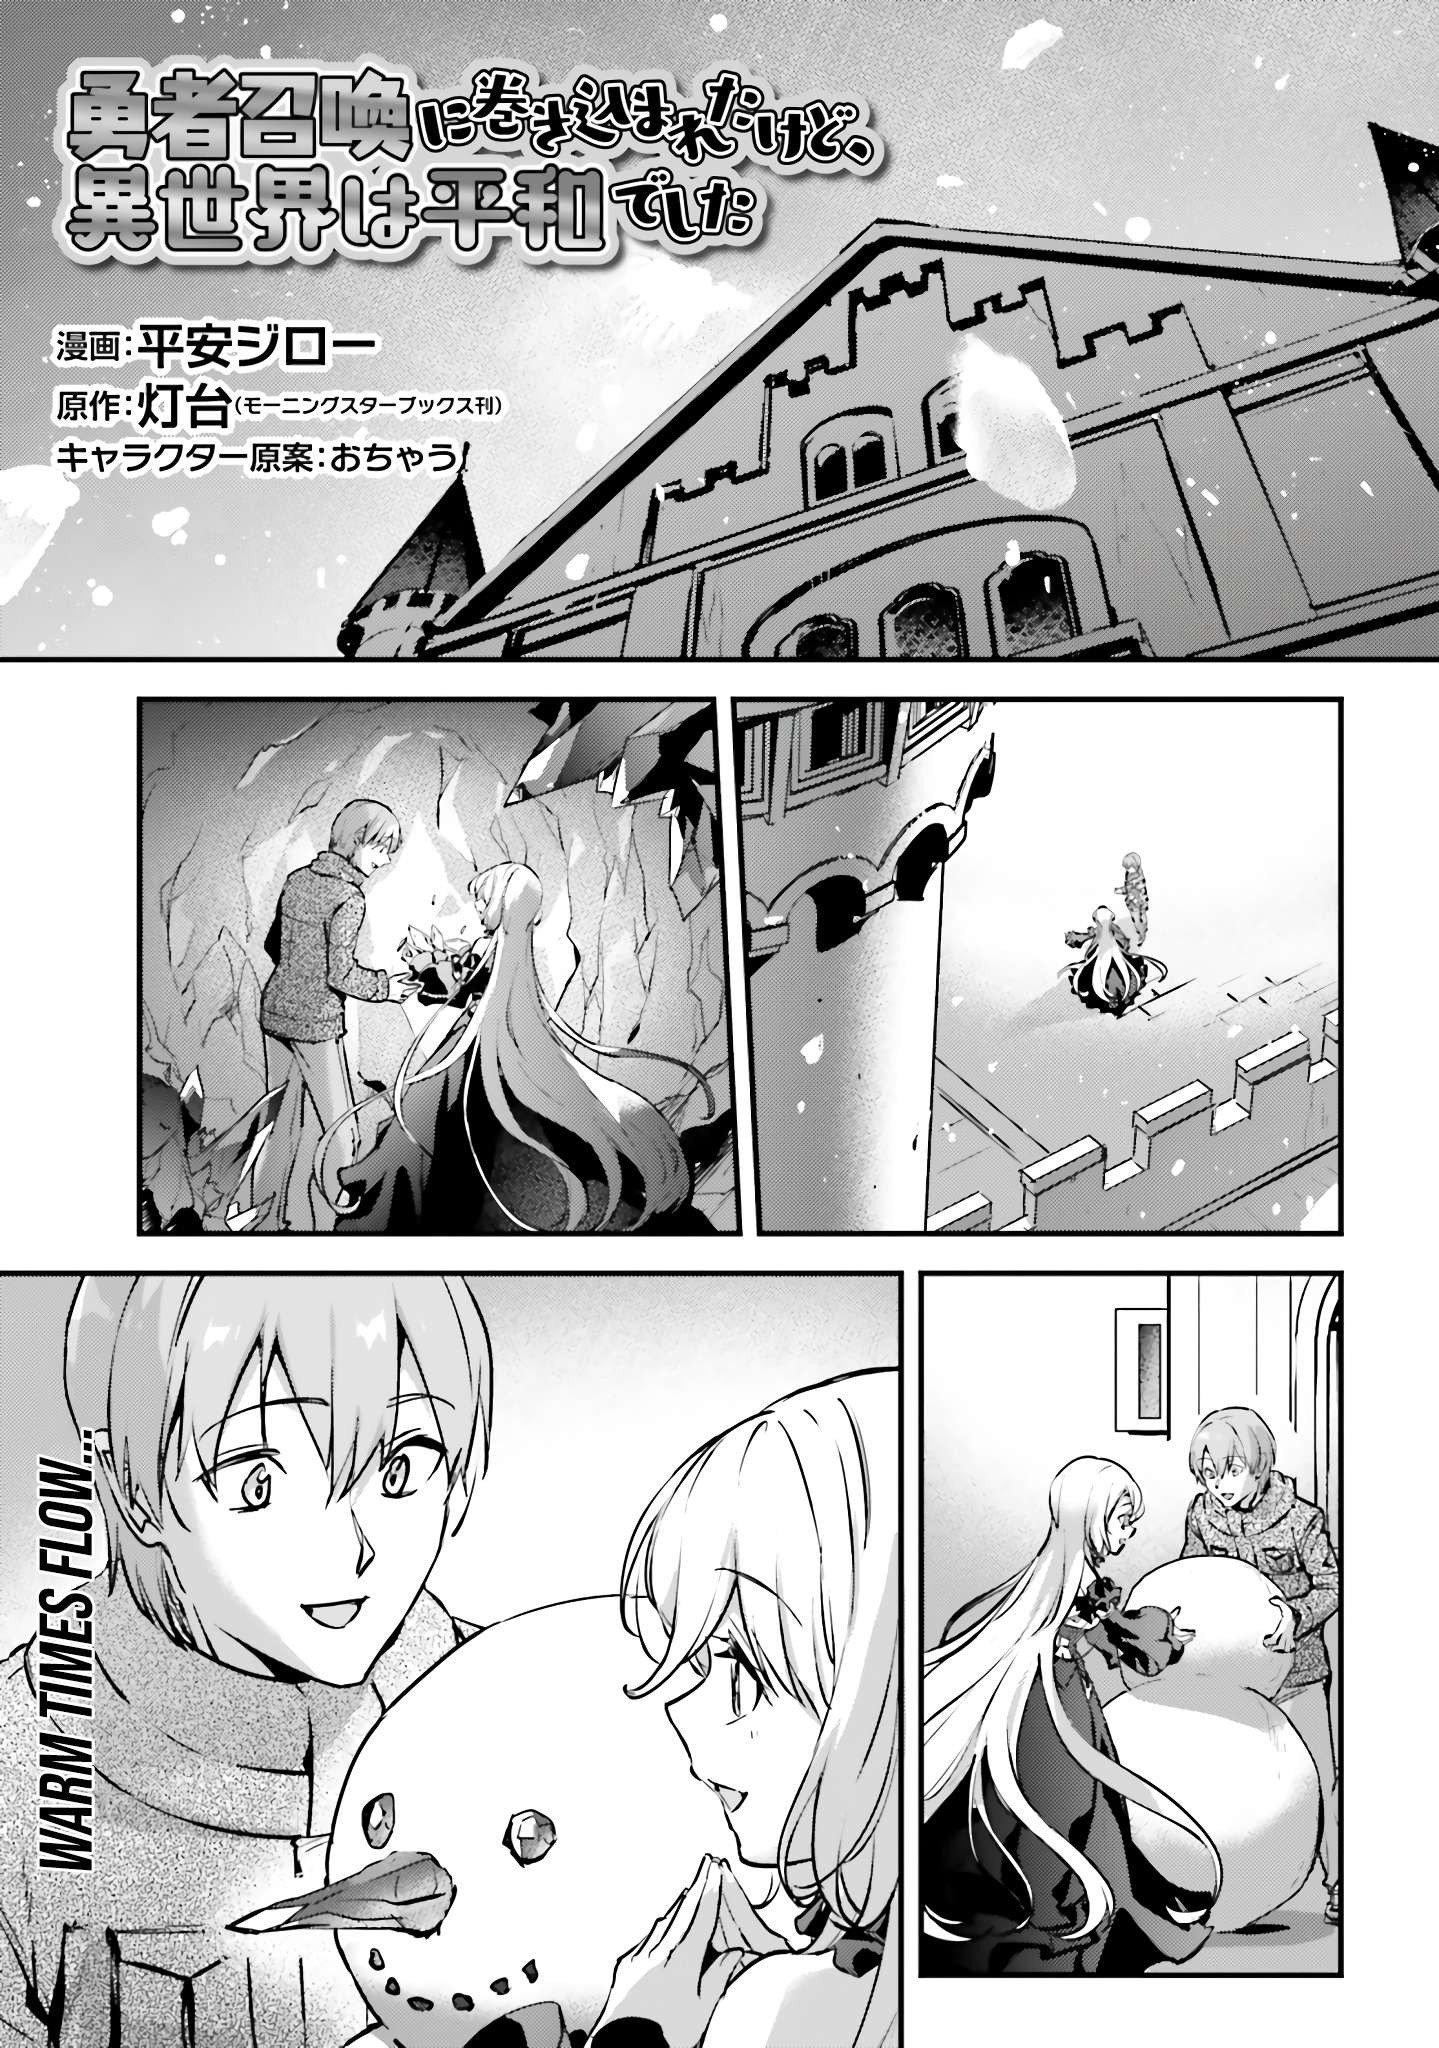 Read Yuusha Shoukan ni Makikomareta kedo, Isekai wa Heiwa deshita Manga  English [New Chapters] Online Free - MangaClash